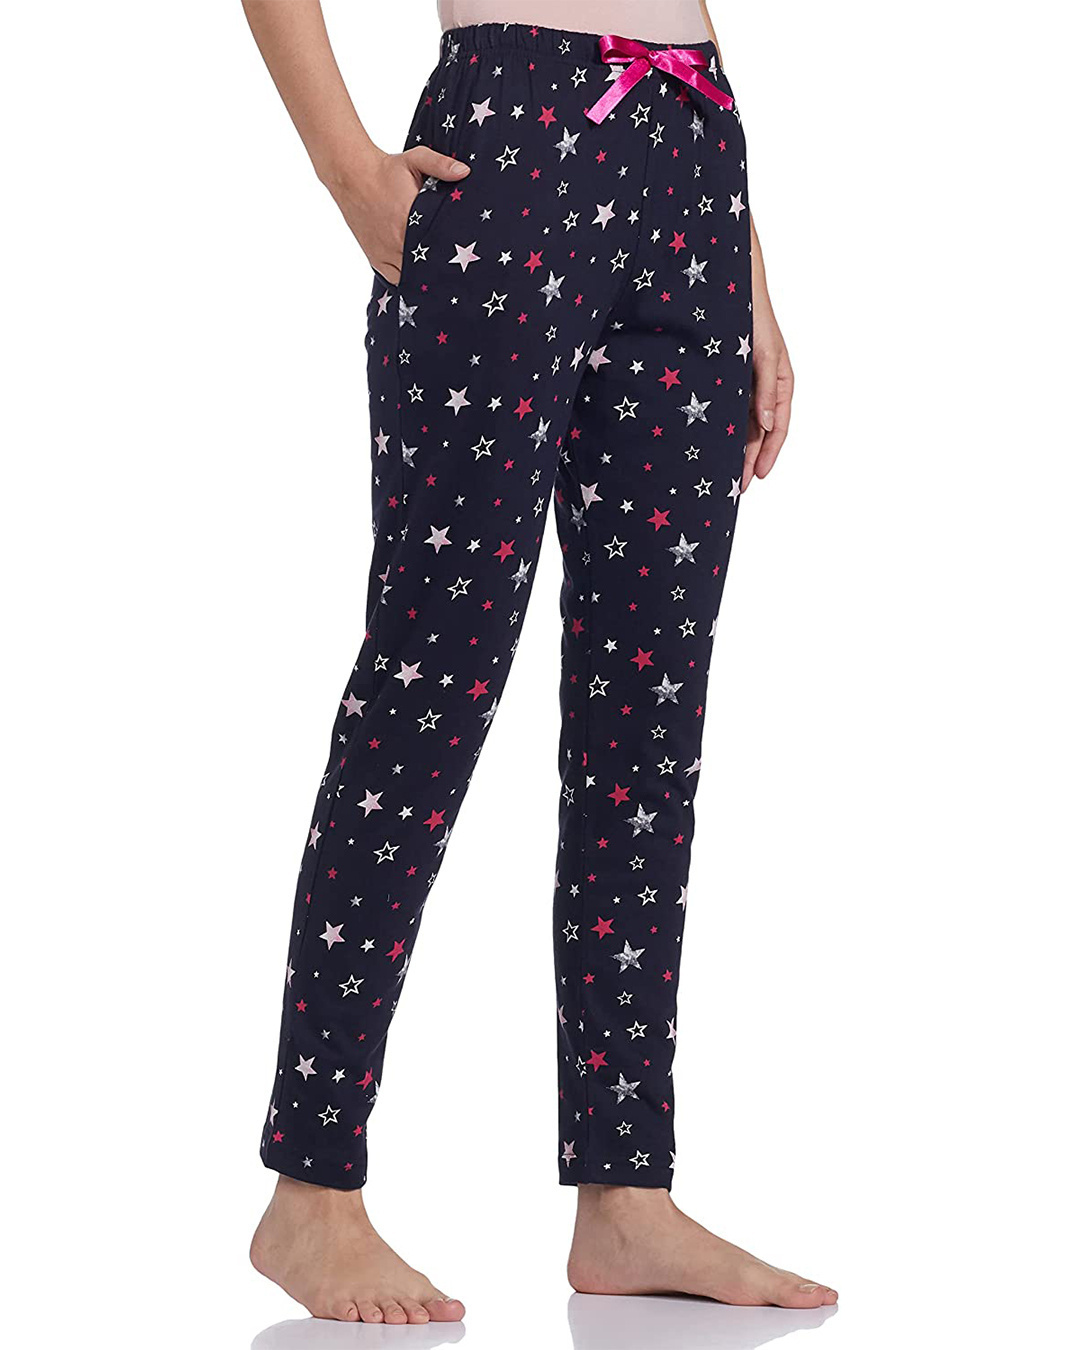 Shop Women's Black All Over Star Printed Cotton Pyjamas-Back